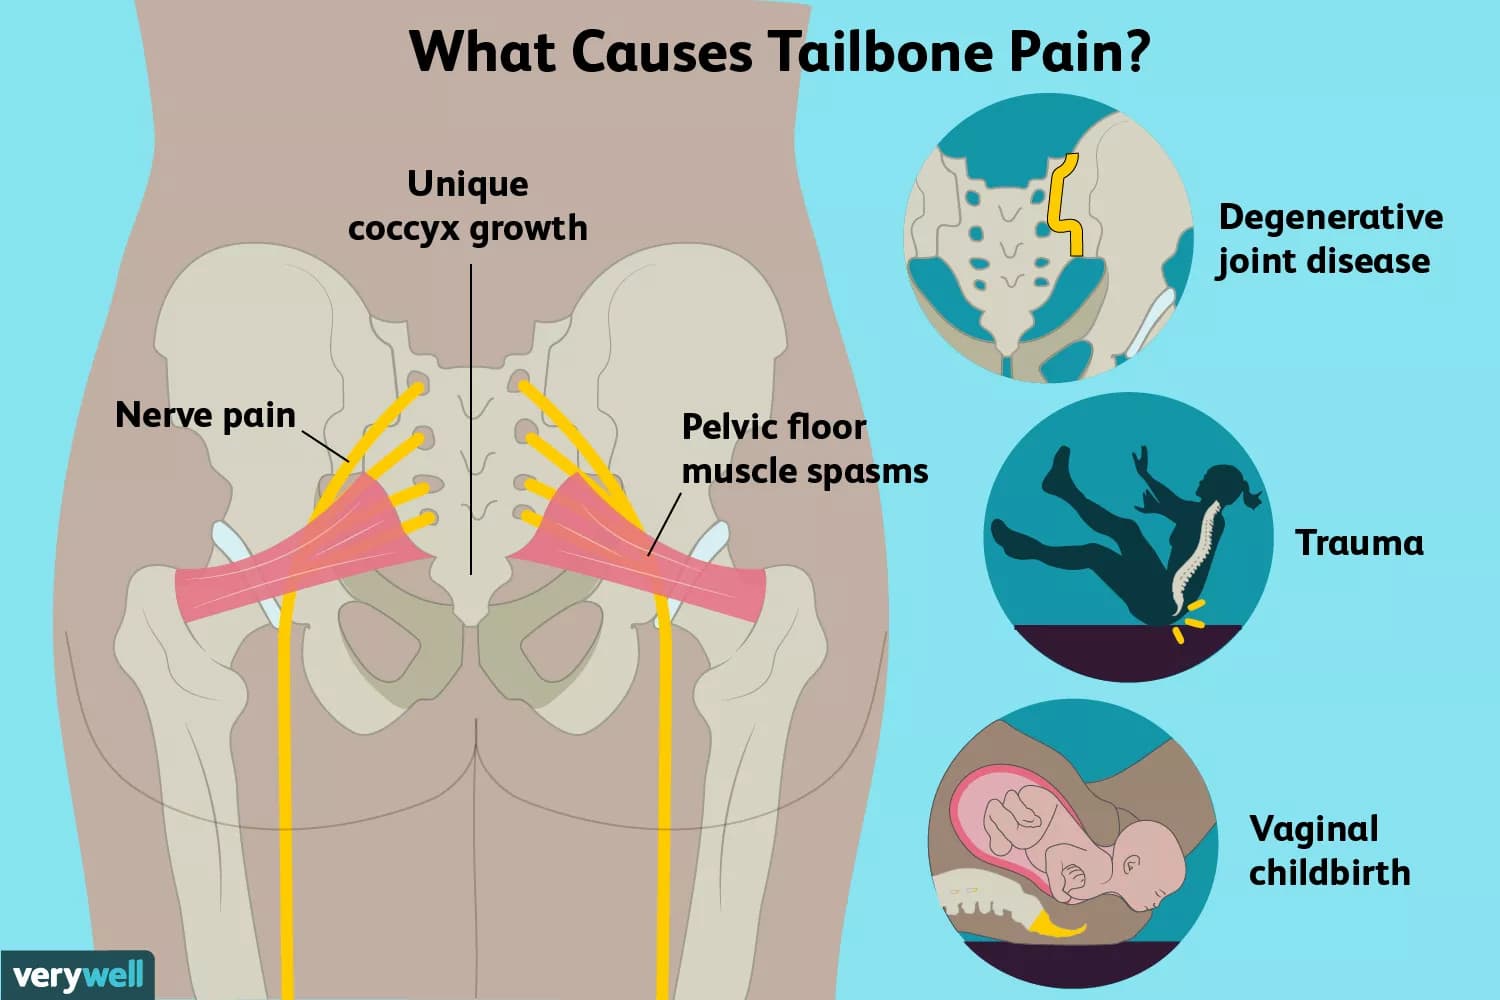 What causes tailbone pain?